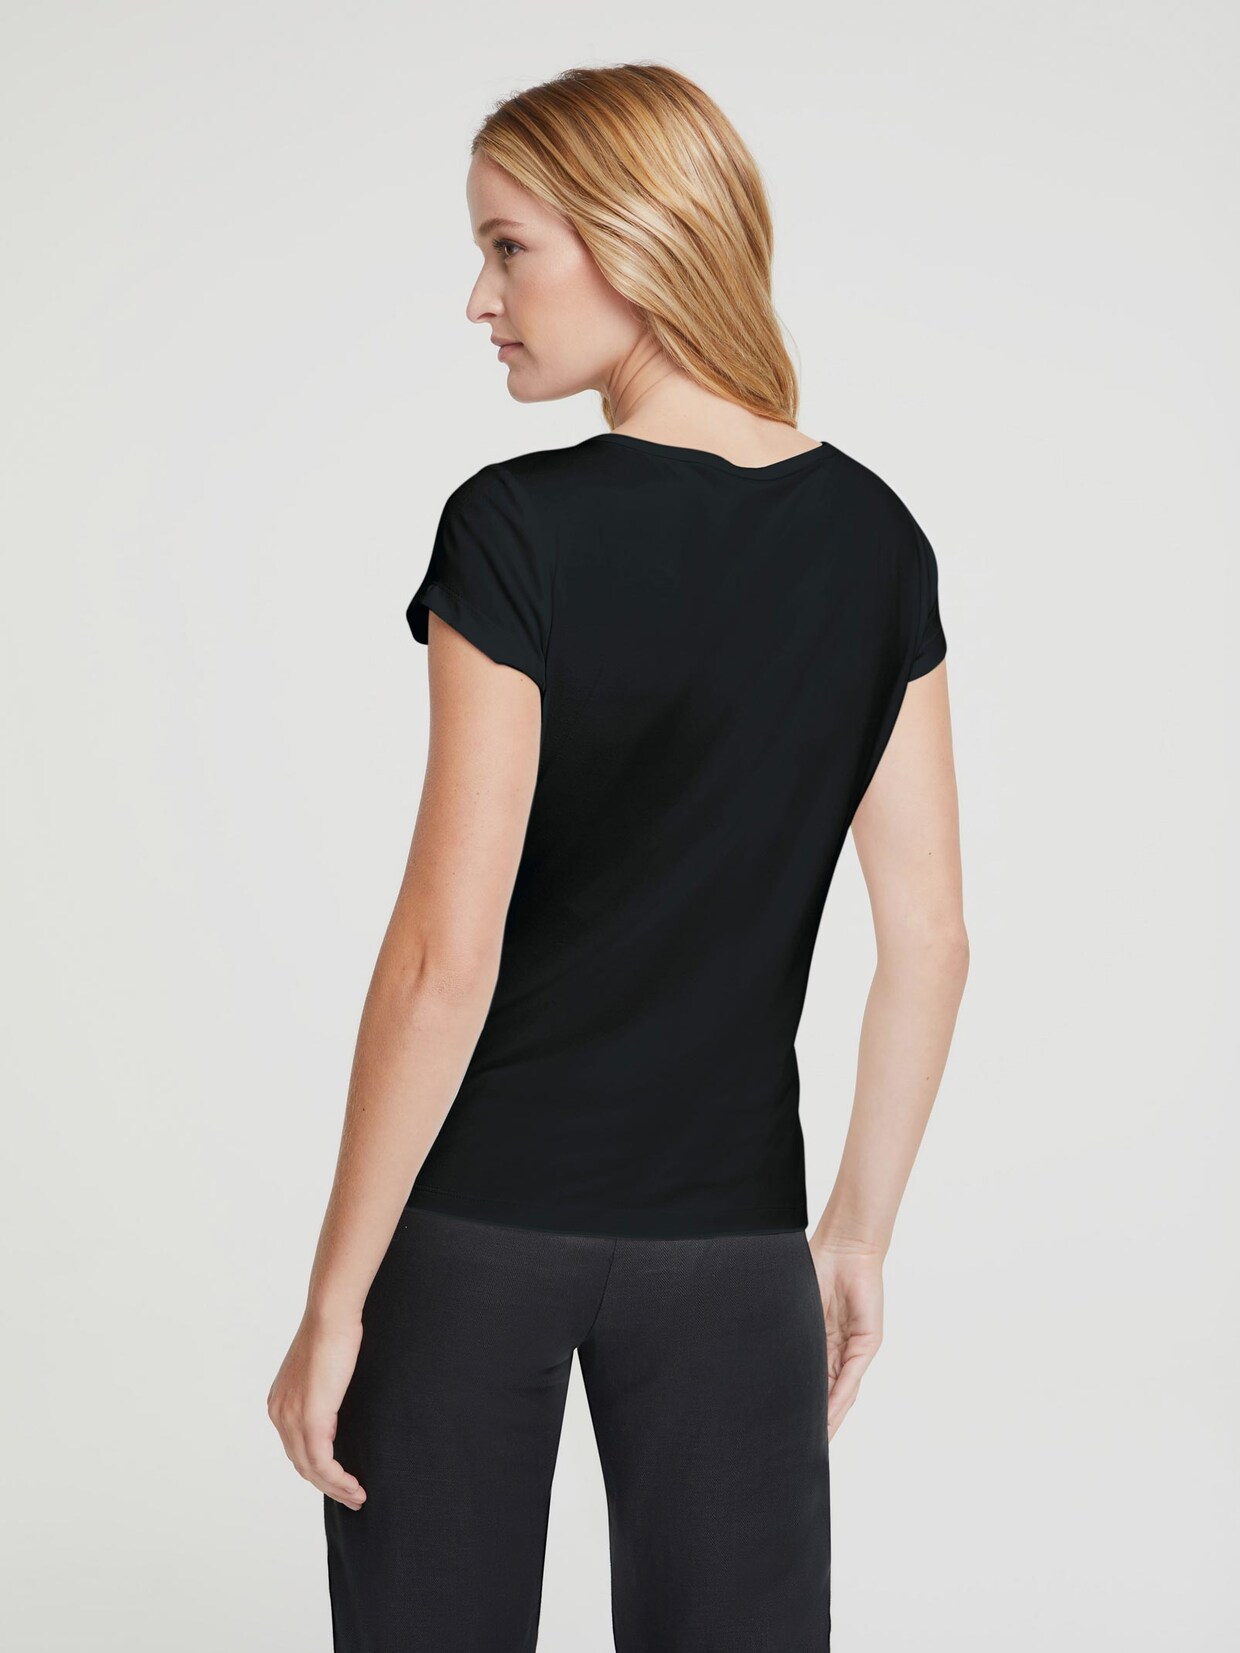 Ashley Brooke Shirt - zwart